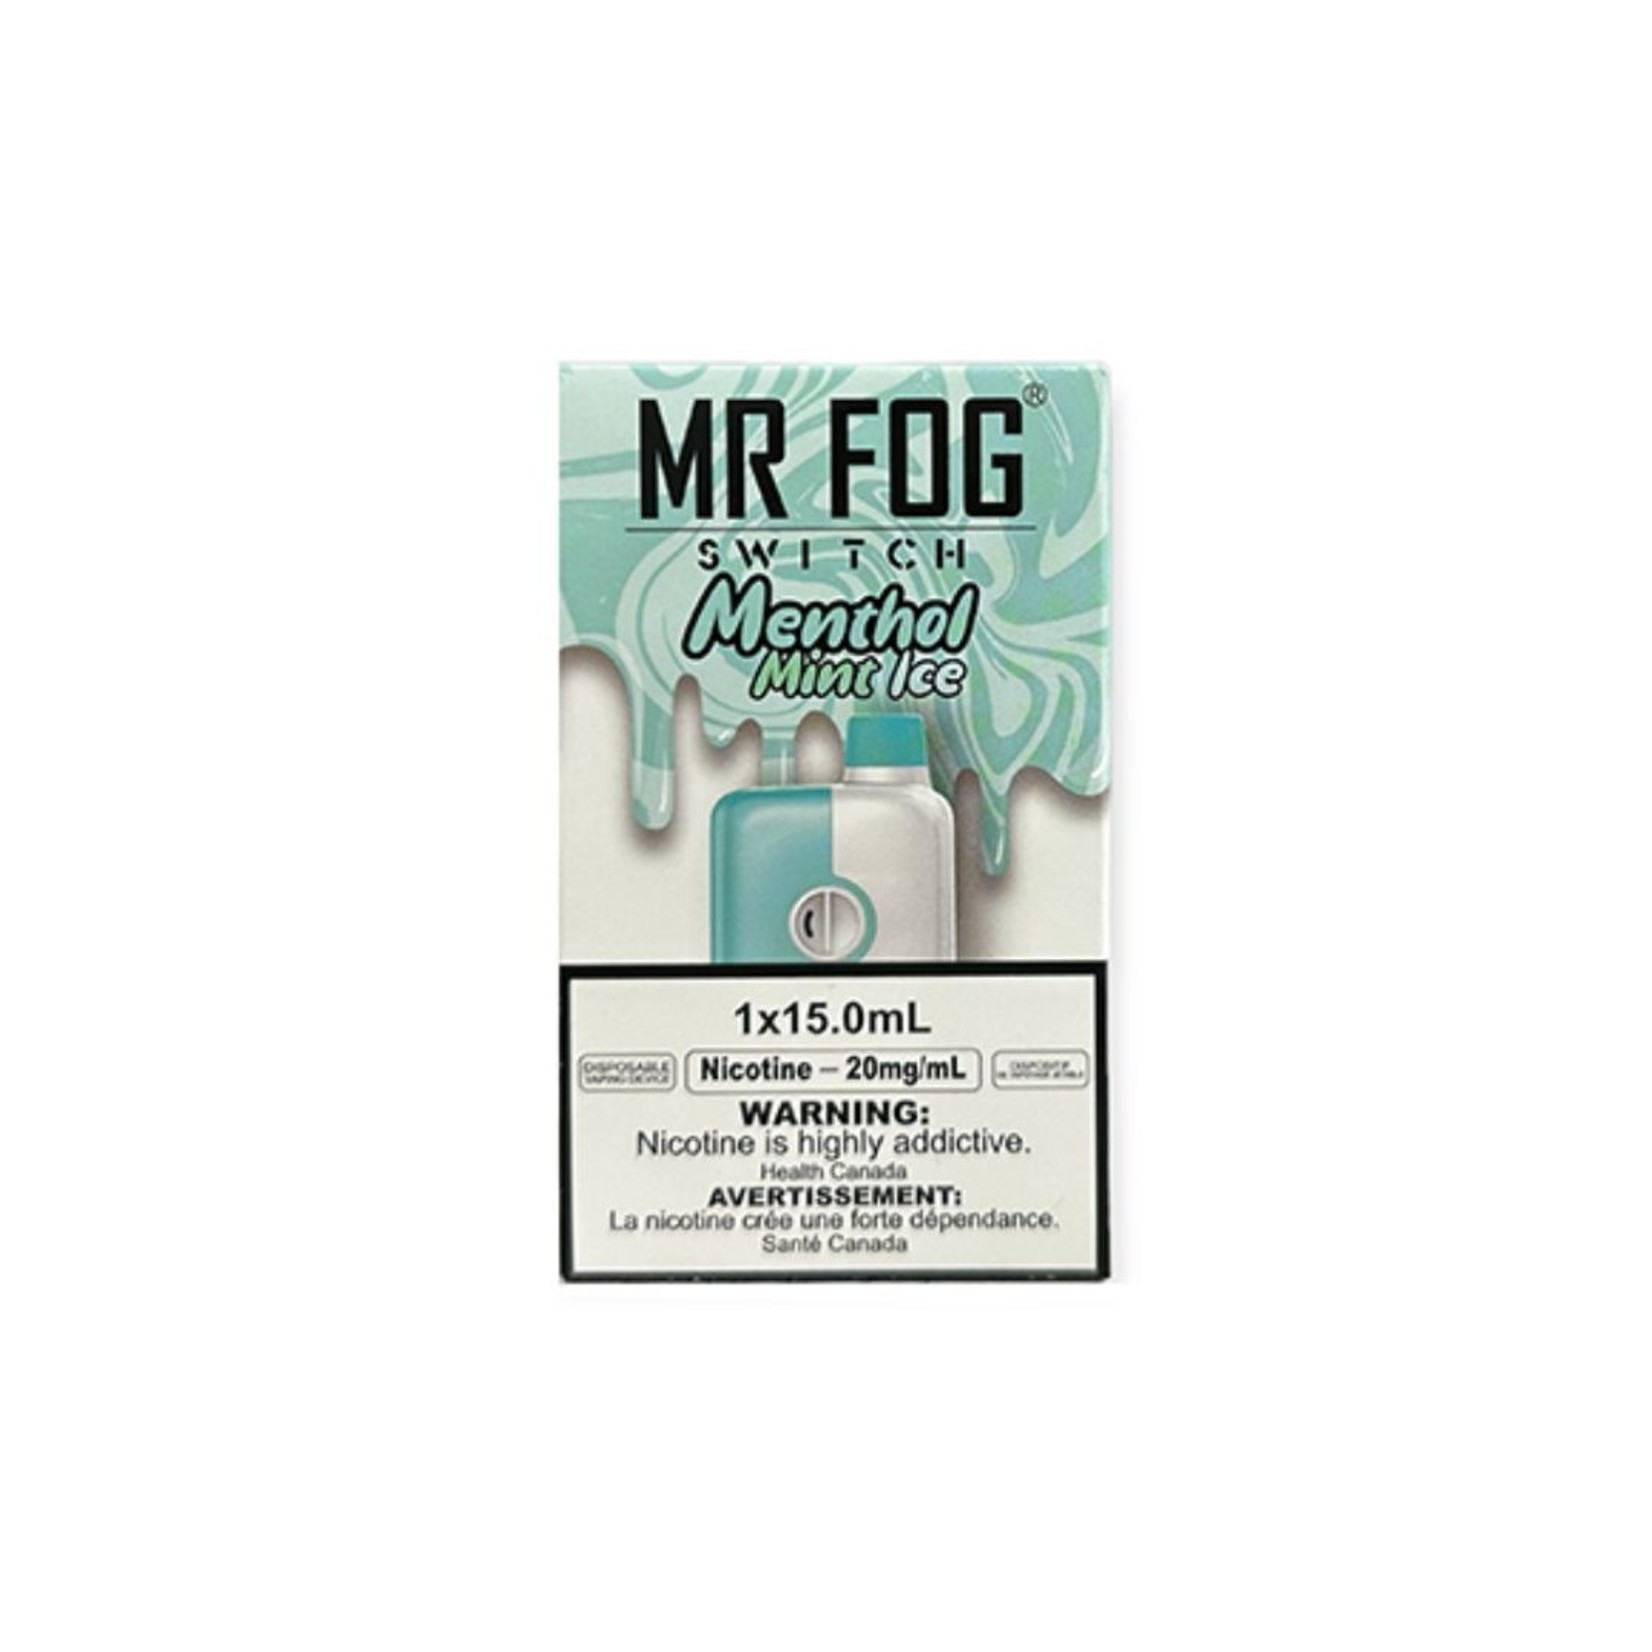 MR FOG Switch 5500 Puffs - Magic Cotton Blueberry